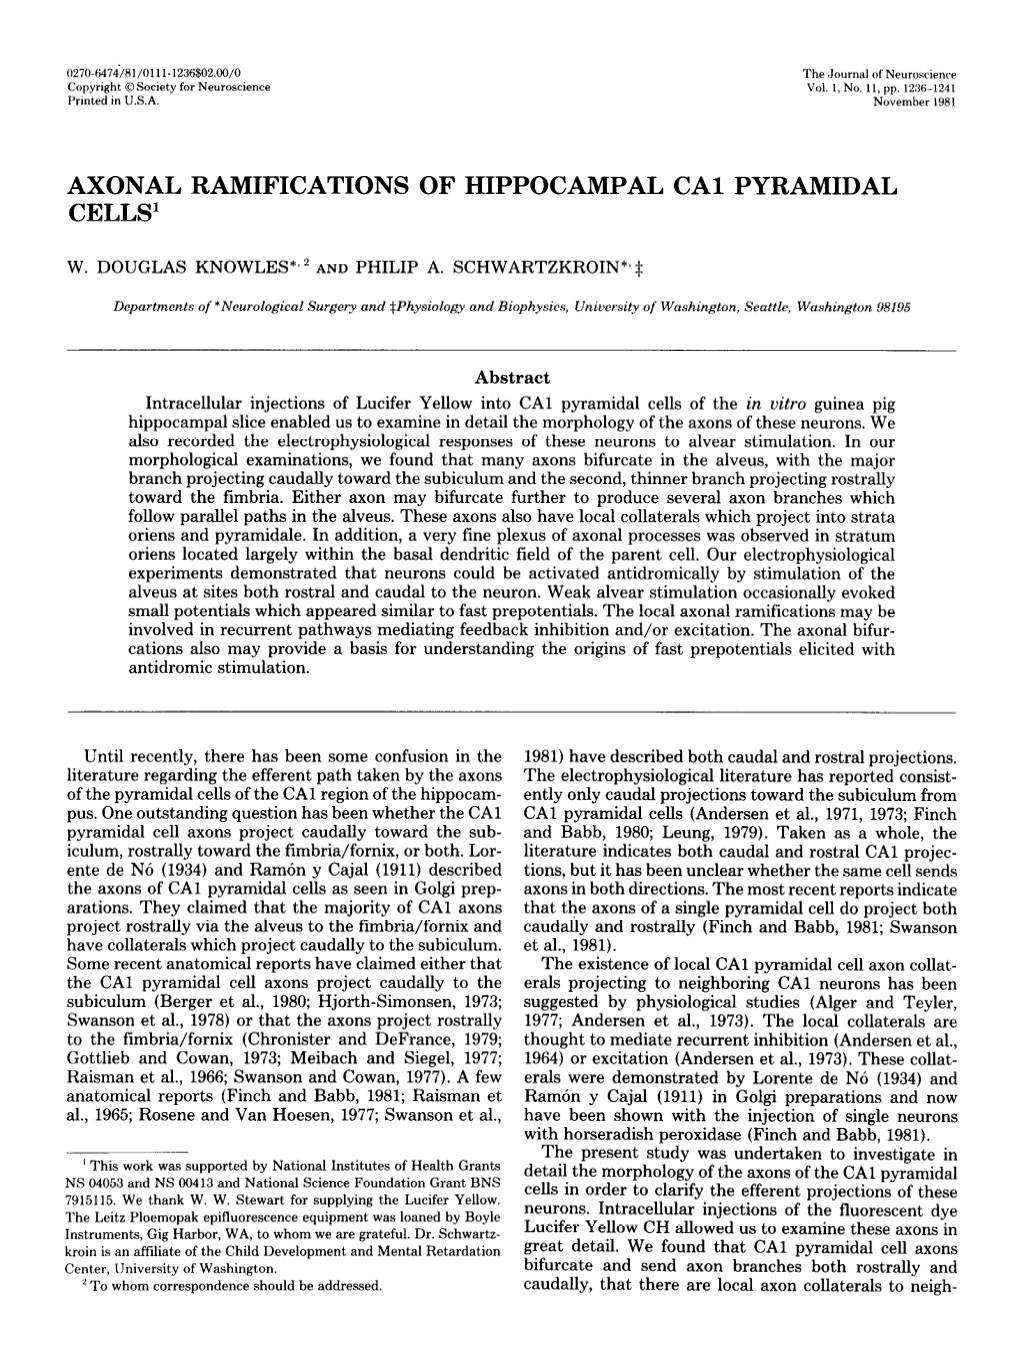 Axonal Ramifications of Hippocampal Ca1 Pyramidal Cells